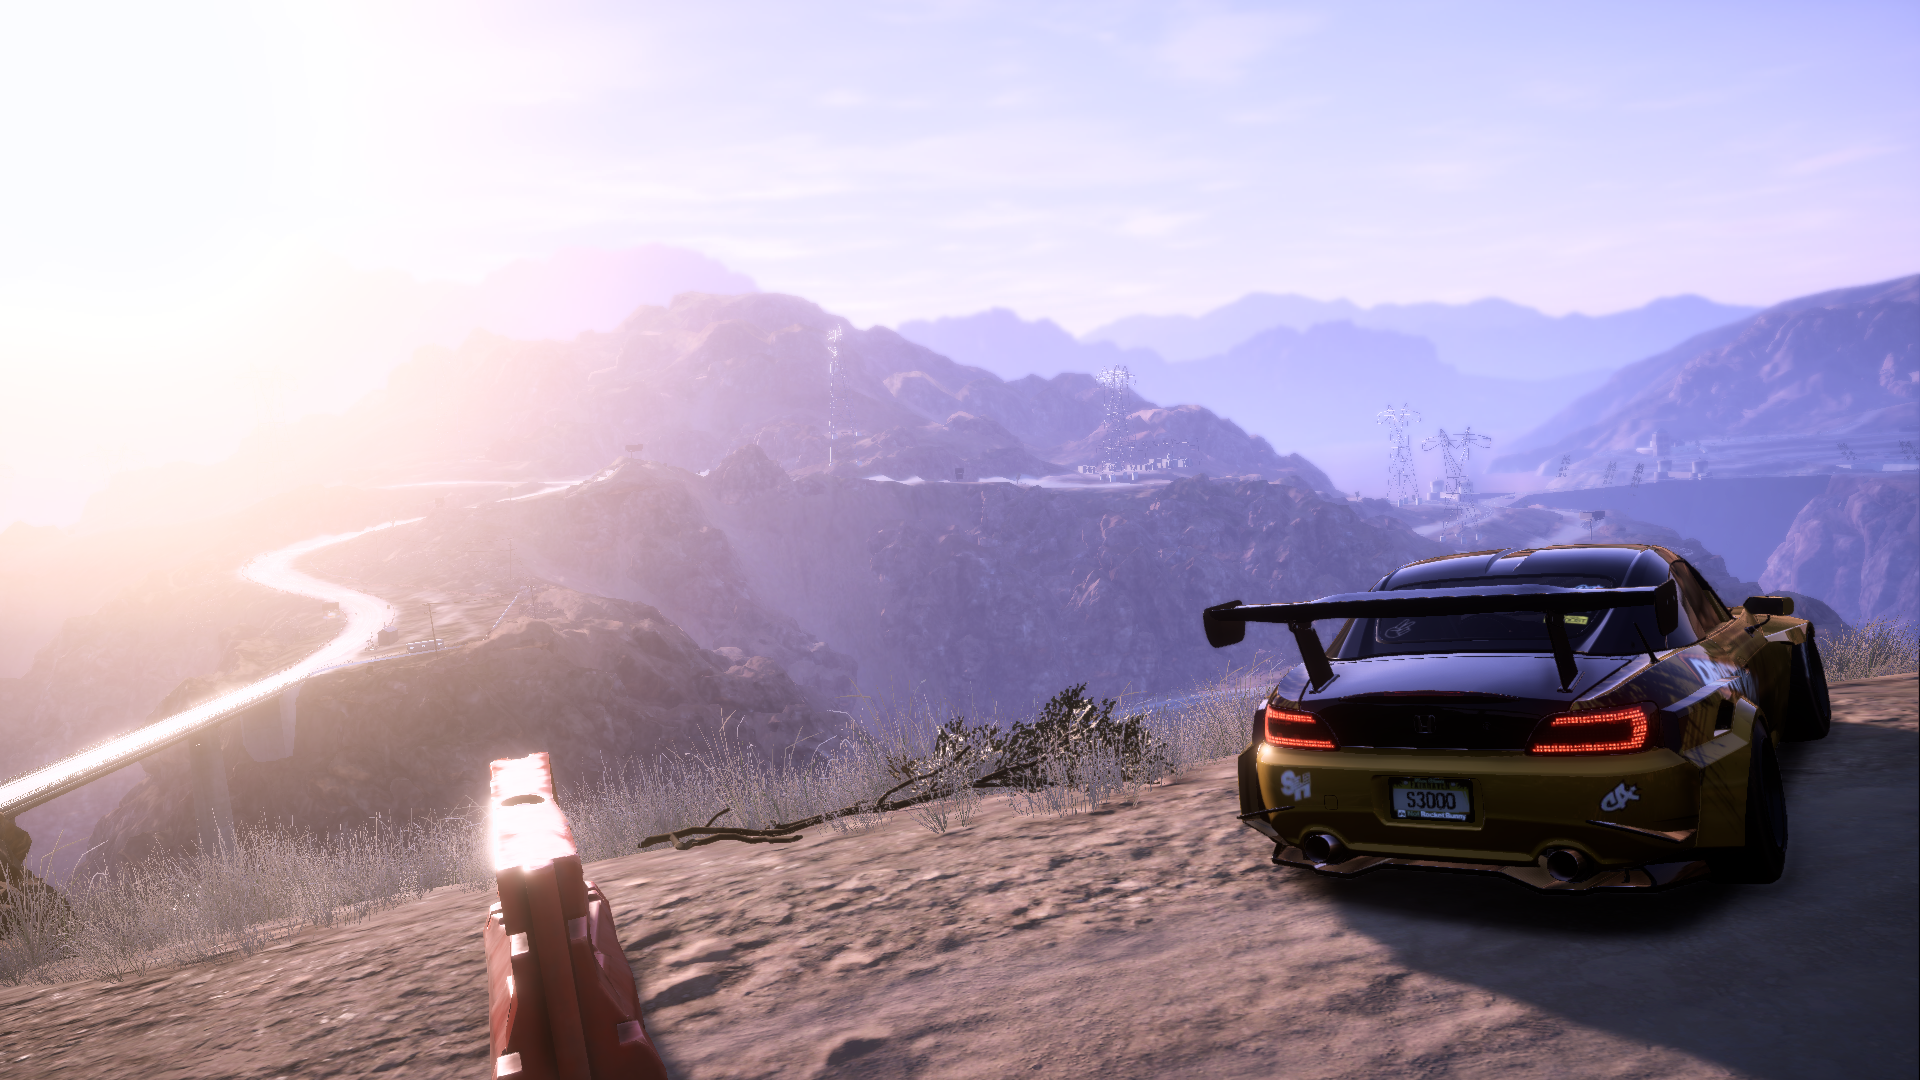 Форза хорайзен 4 вылетает. Need for Speed: Payback. Need for Speed Payback пейзаж. Нид фор СПИД пэйбэк. Forza Horizon 4 Ford Mustang.